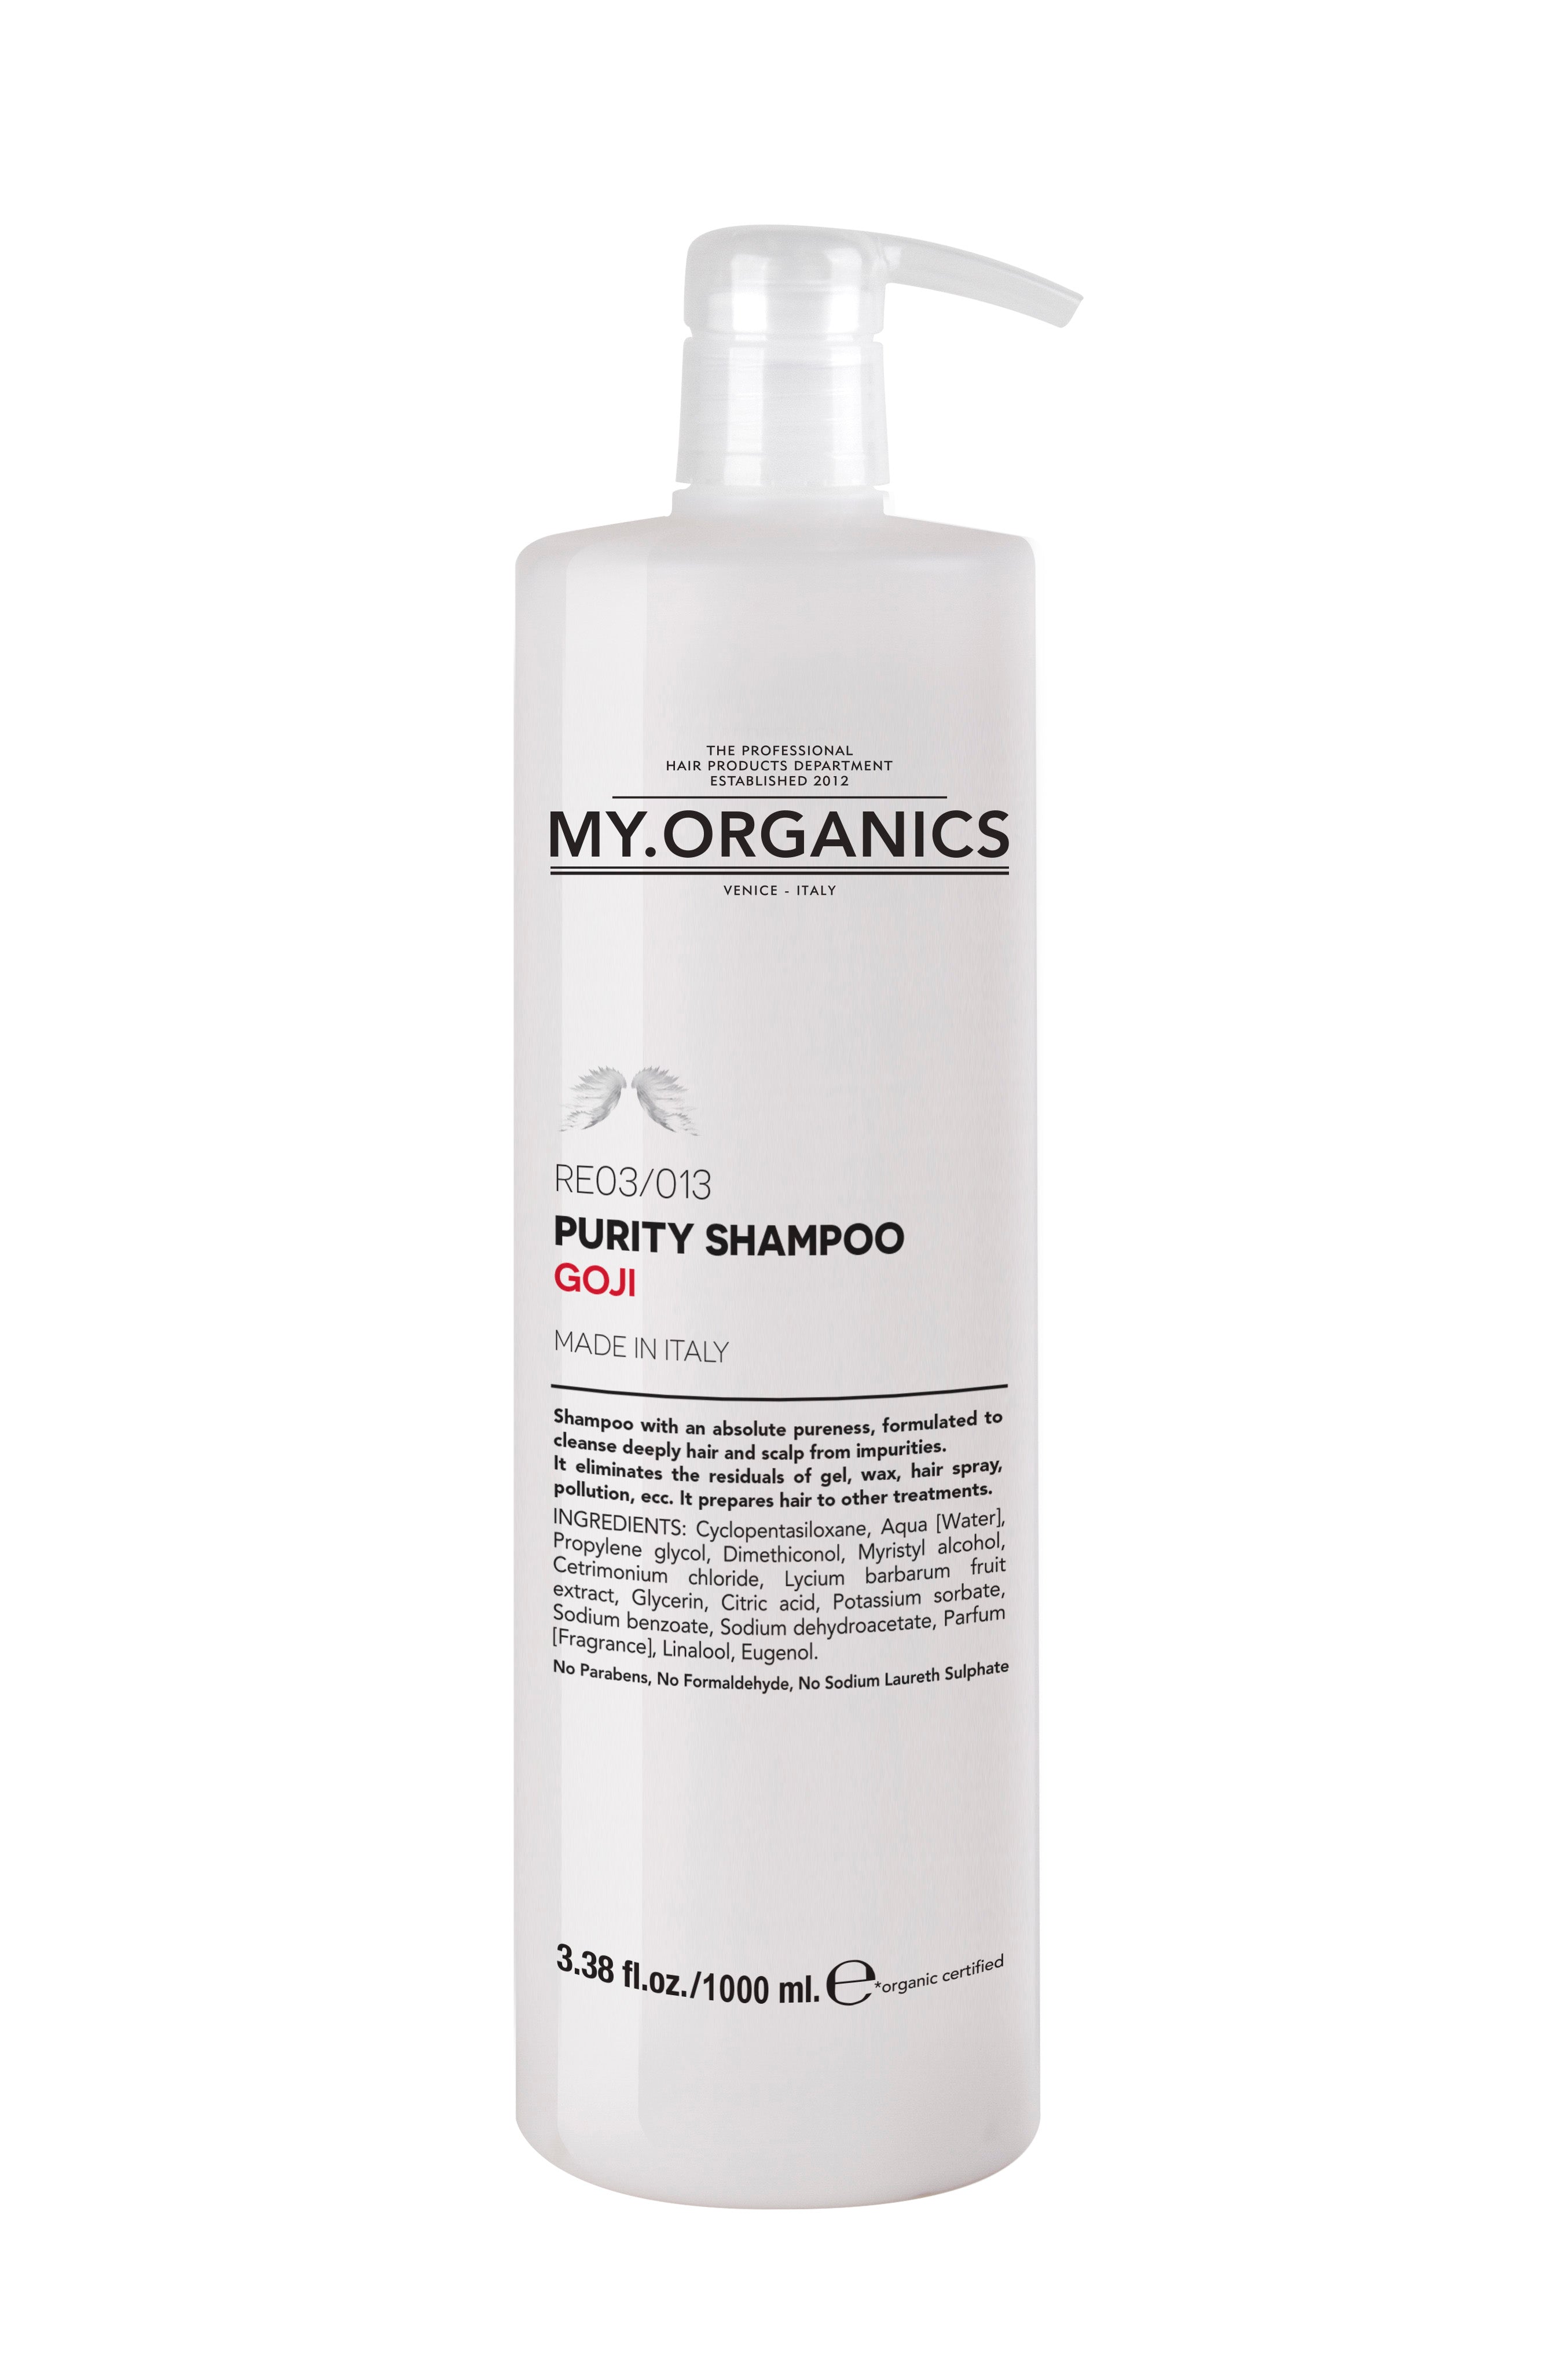 High purity бальзам. My Organics для волос Goji. Шампунь my Organics. Purifying Shampoo 1000 ml. Шампунь с ментолом 1000мл.